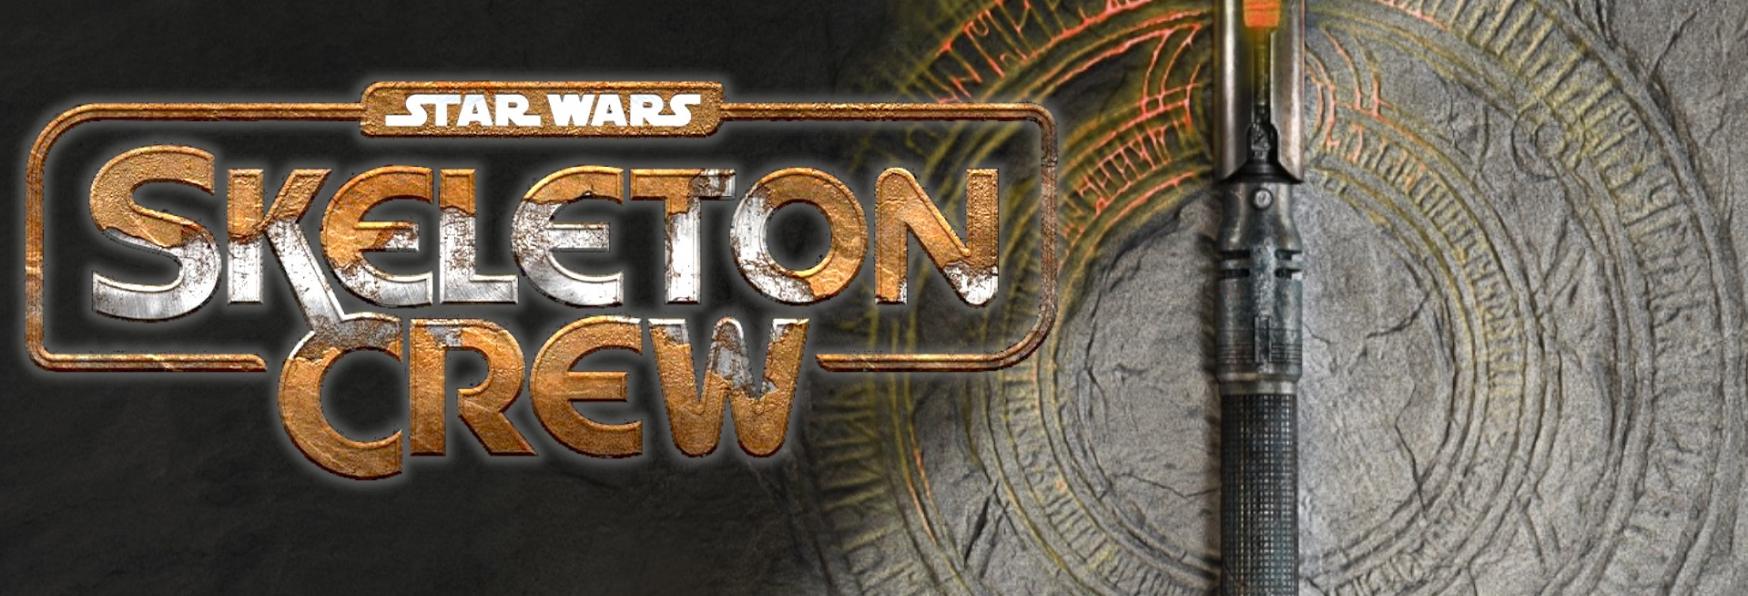 Star Wars: Skeleton Crew - David Lowery (Peter Pan & Wendy) dirigerà un Episodio?